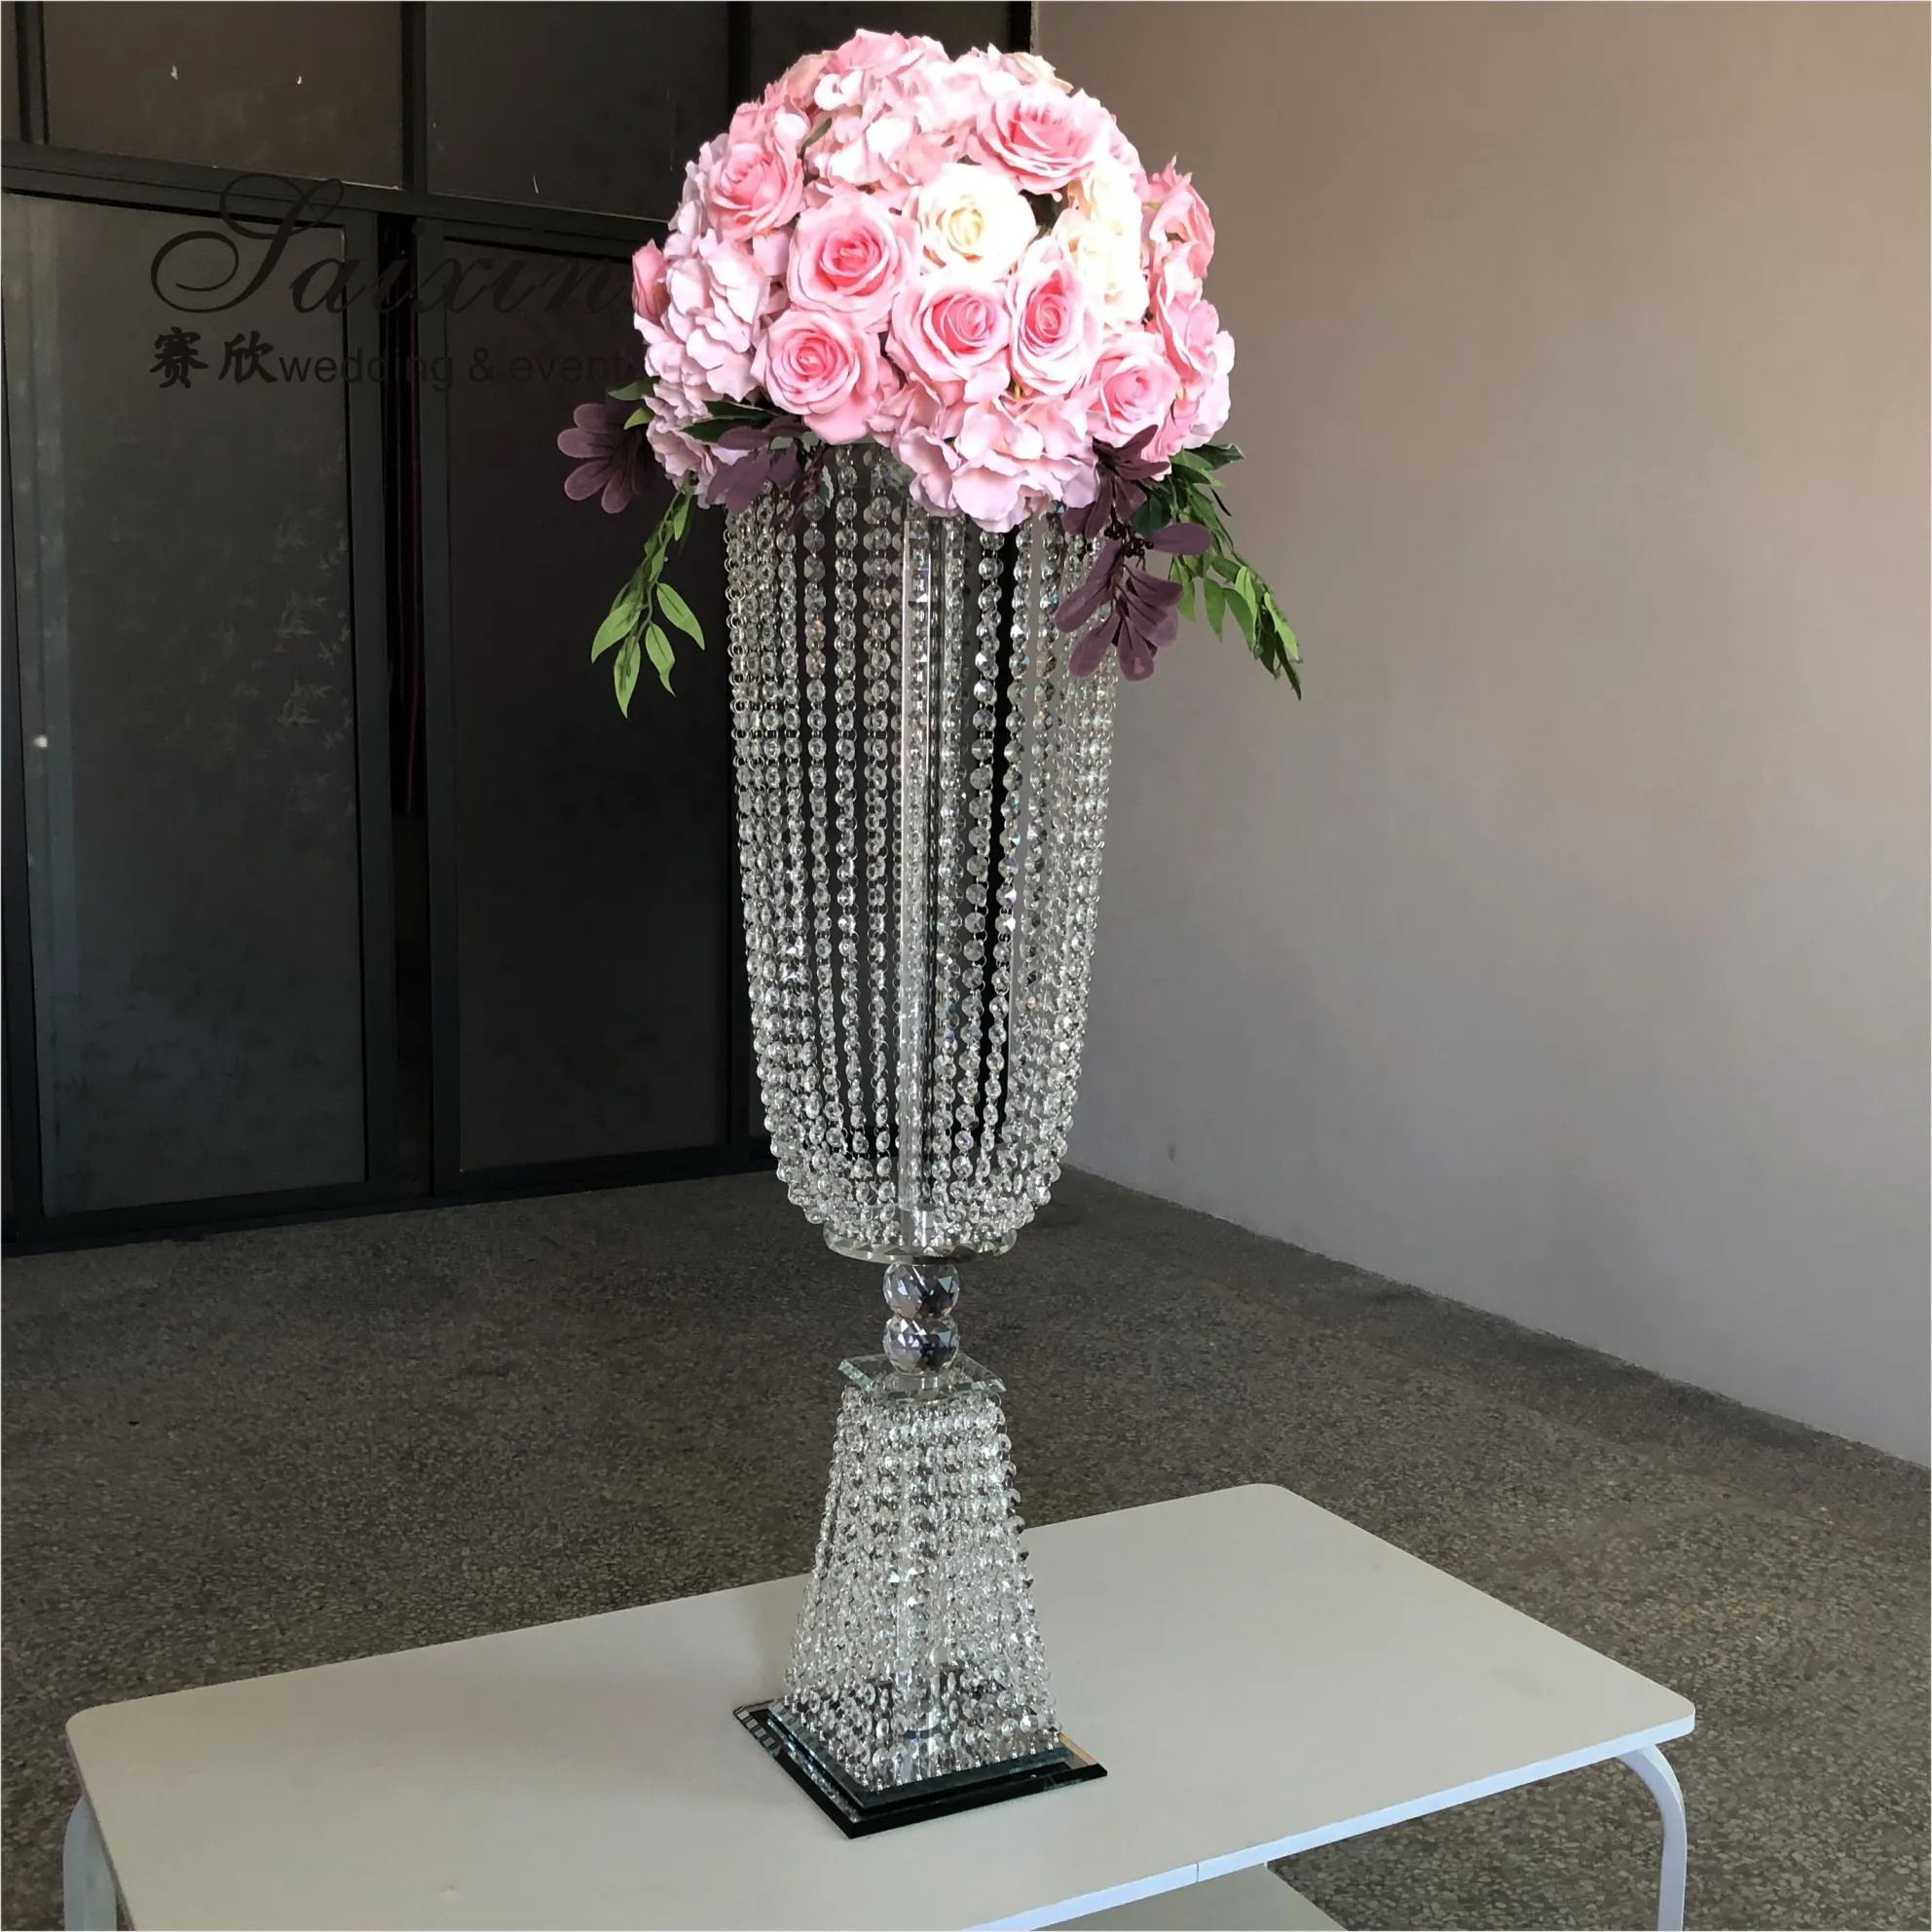 ZT-209 Bling crystal flower stand holder centerpiece wedding event decoration supplies